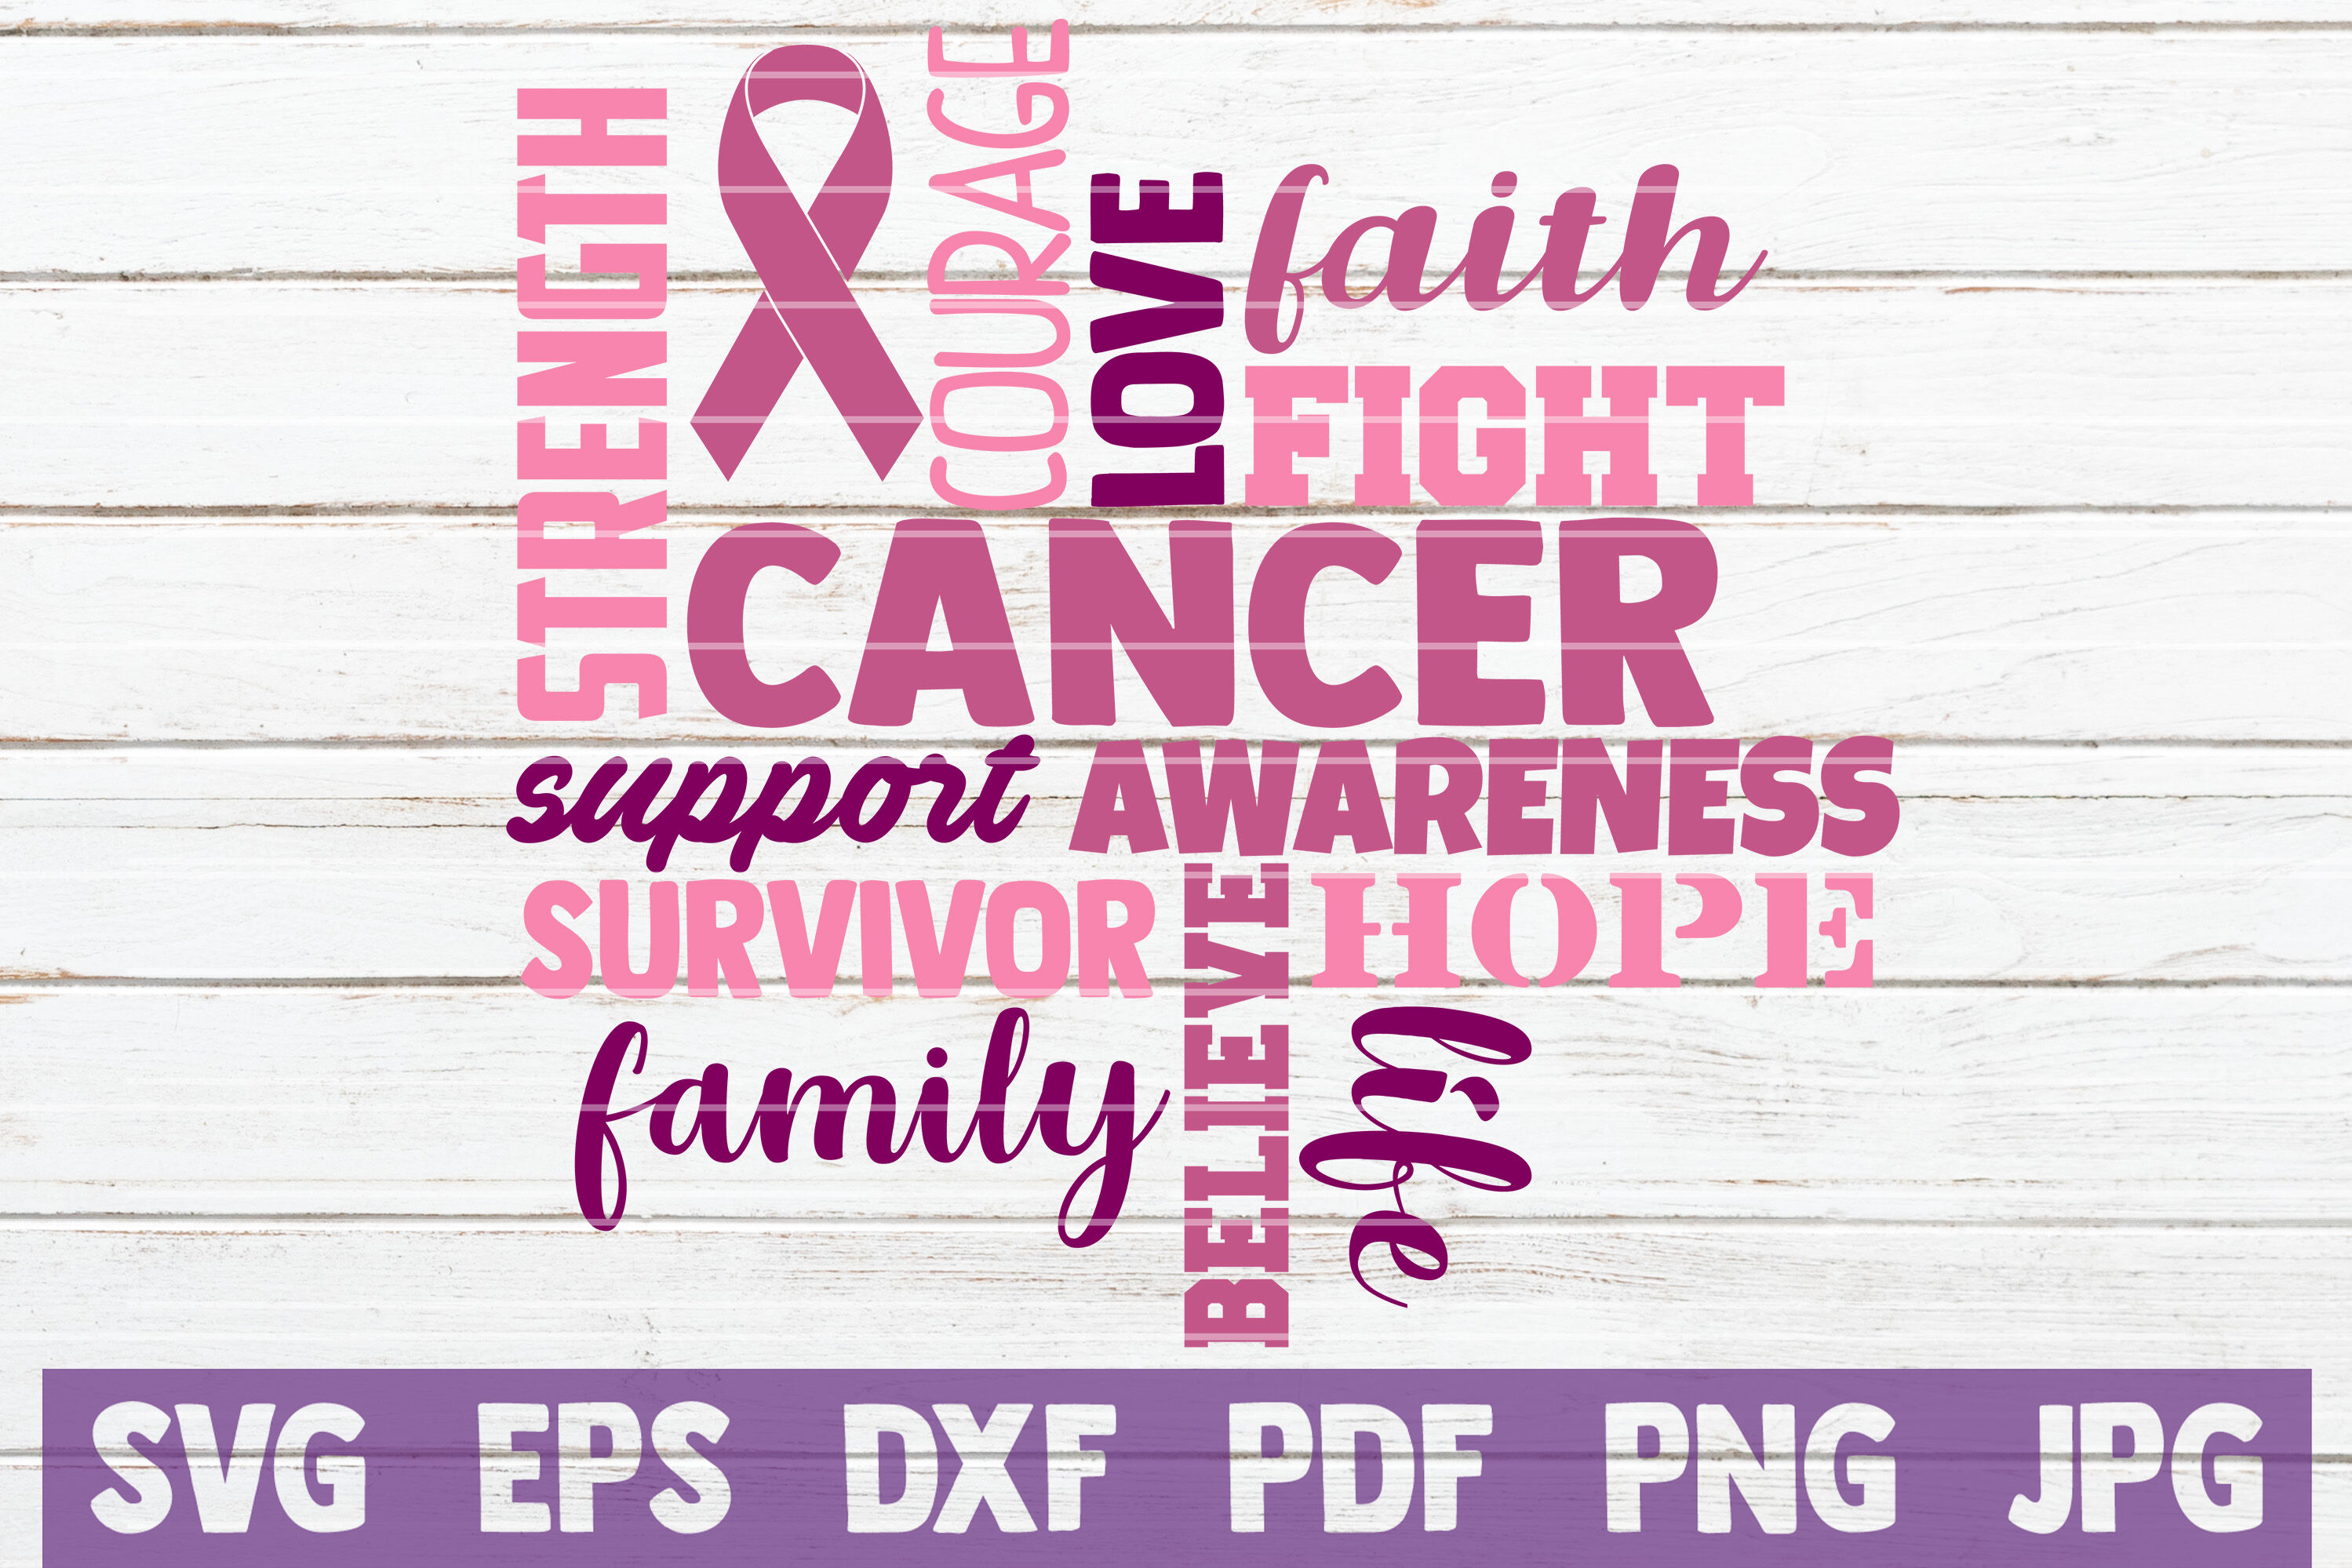 Download Free SVG Cut File - fighter cancer svg, awareness SVG, breast canc...